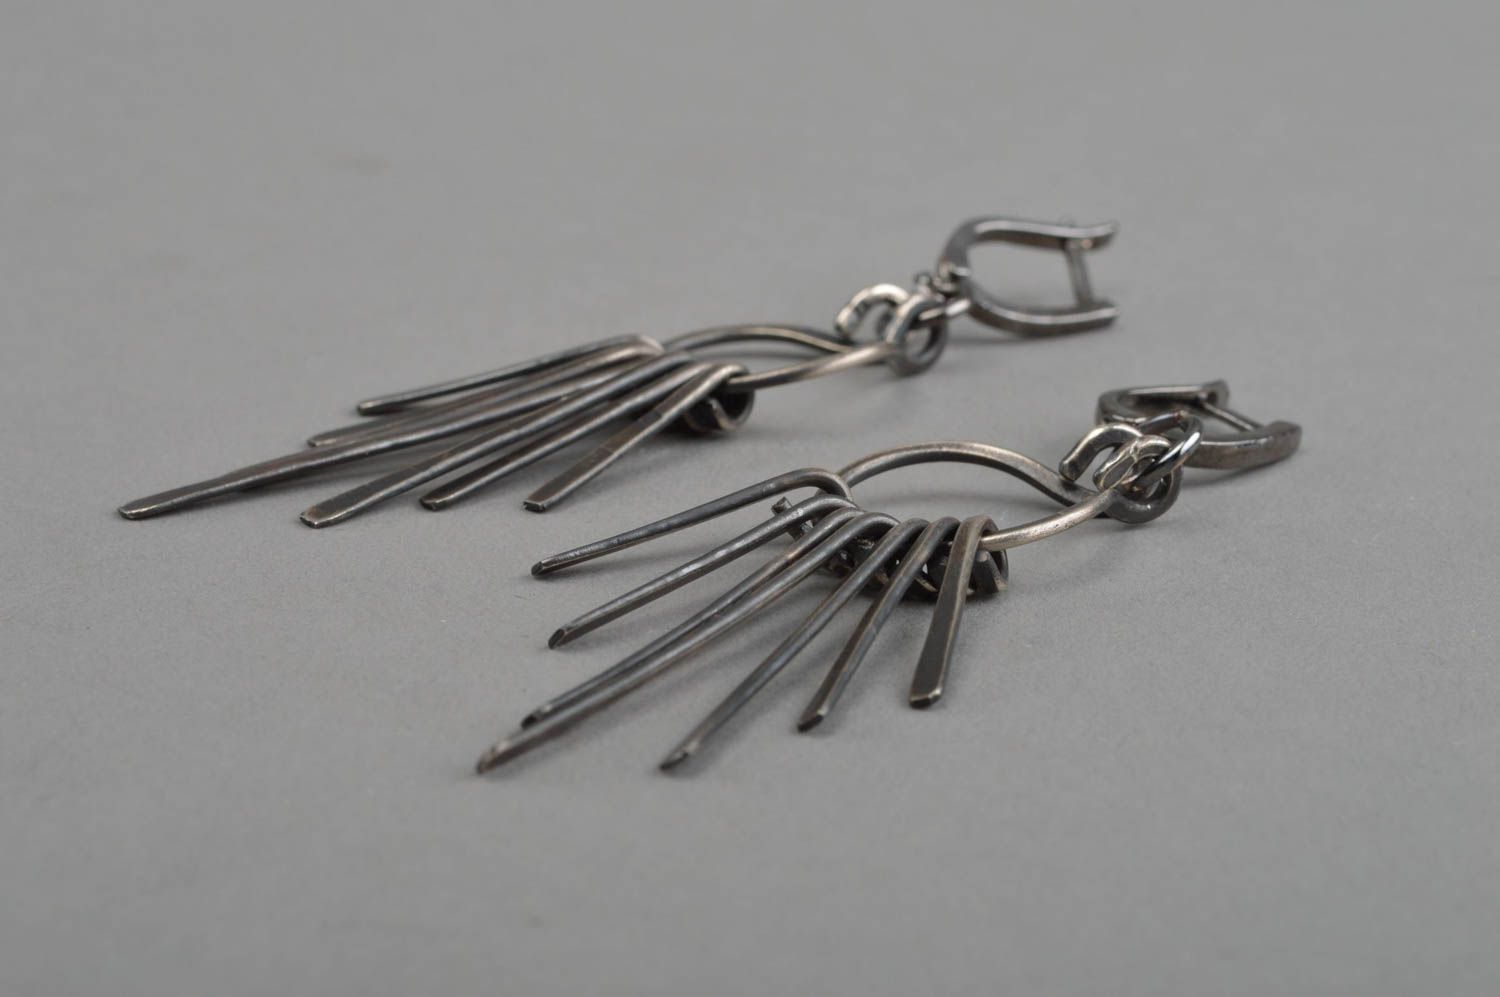 Unusual homemade metal earrings stylsih cupronickel earrings gifts for her photo 3